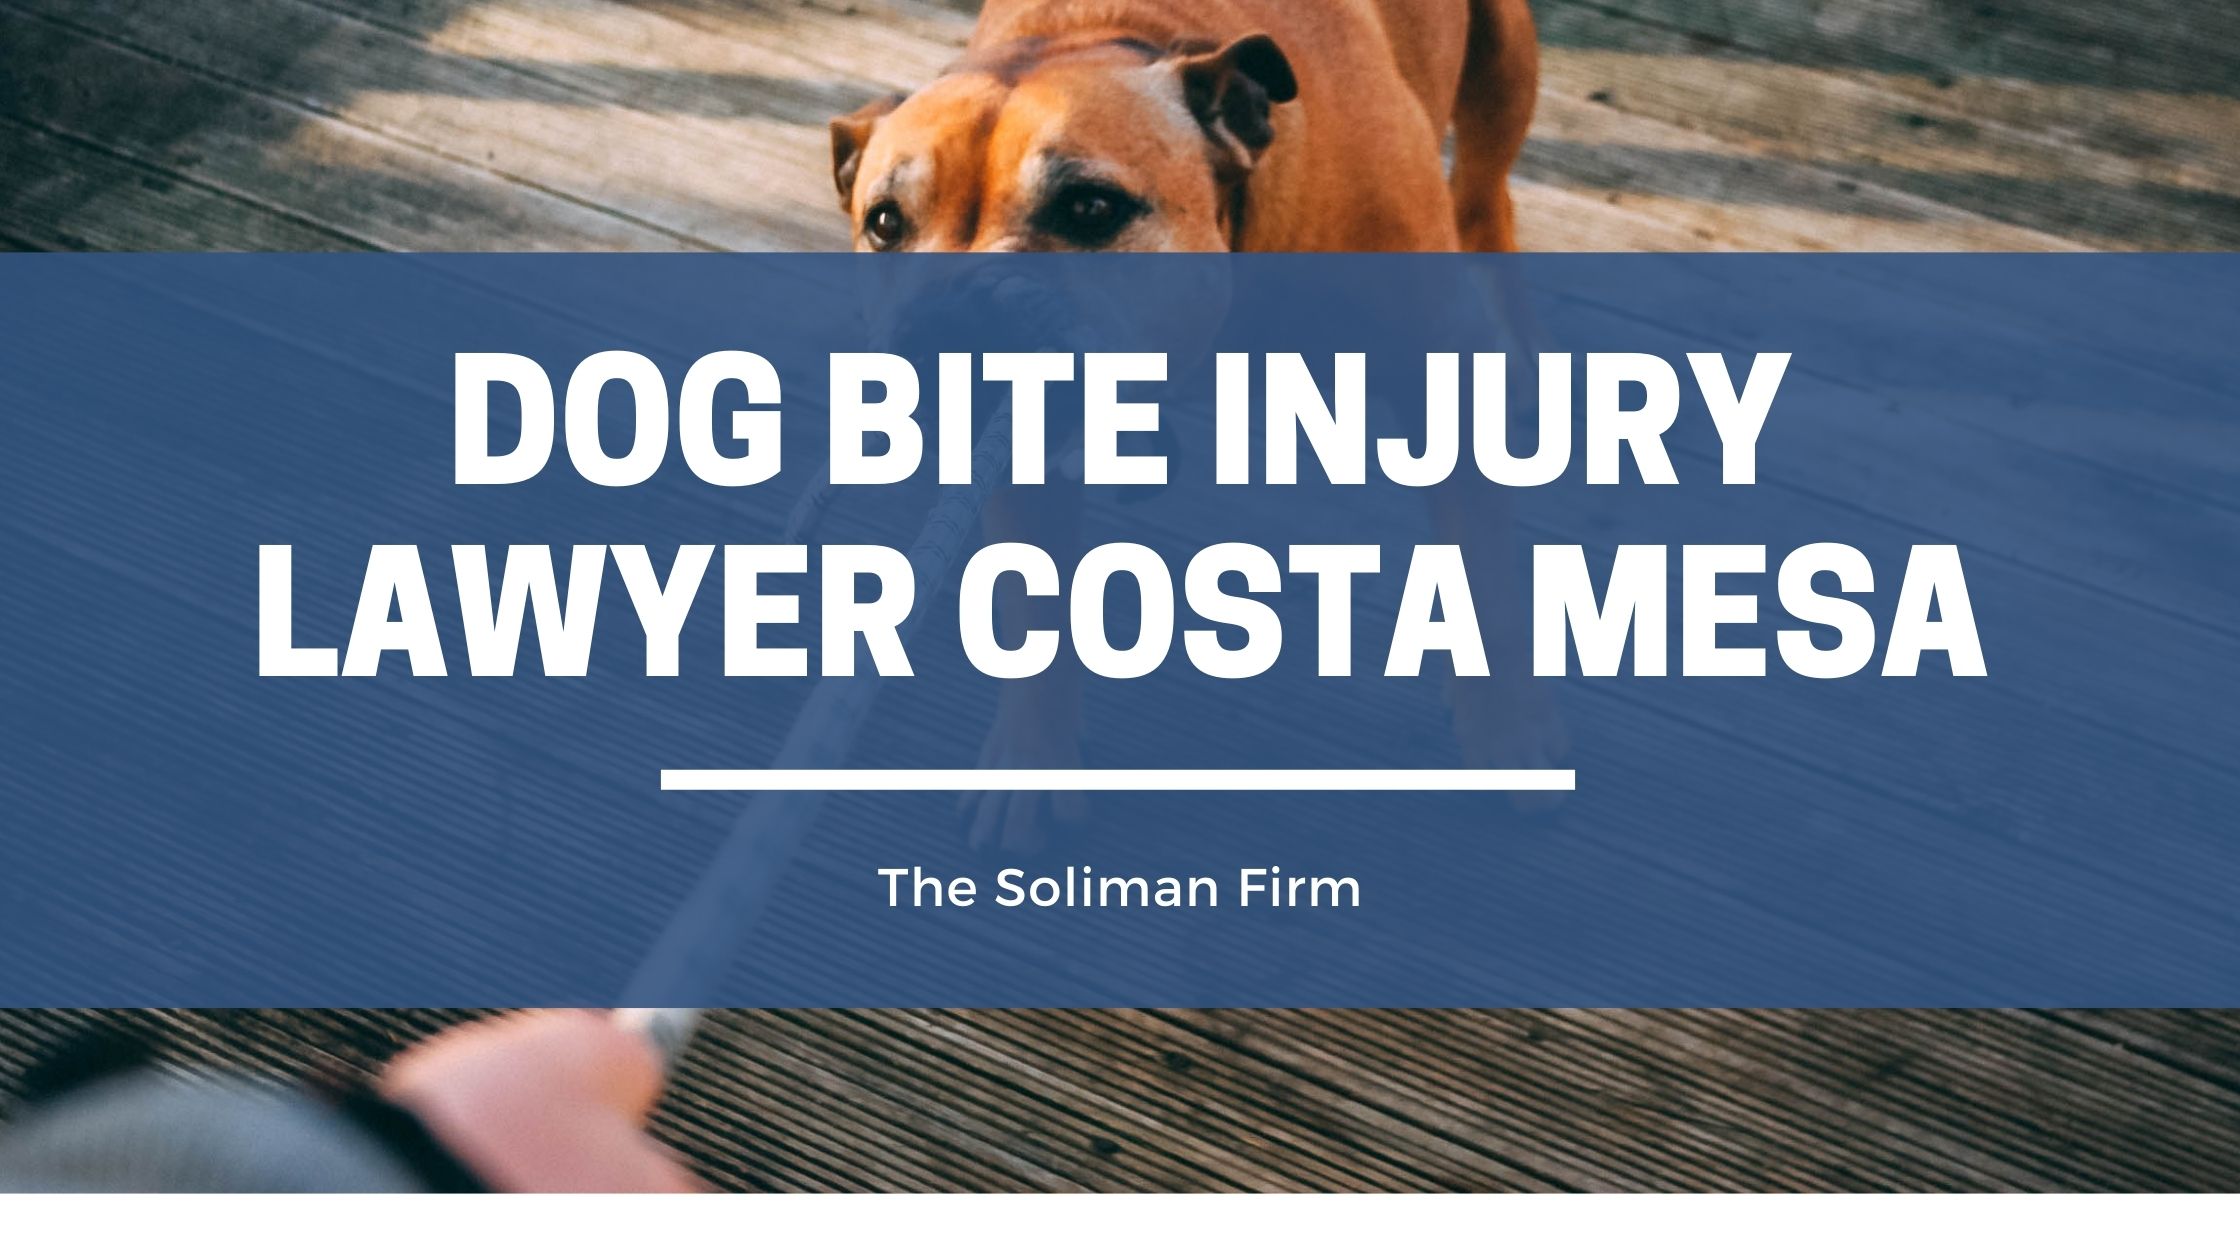 Dog Bite Injury Lawyer Costa Mesa, CA